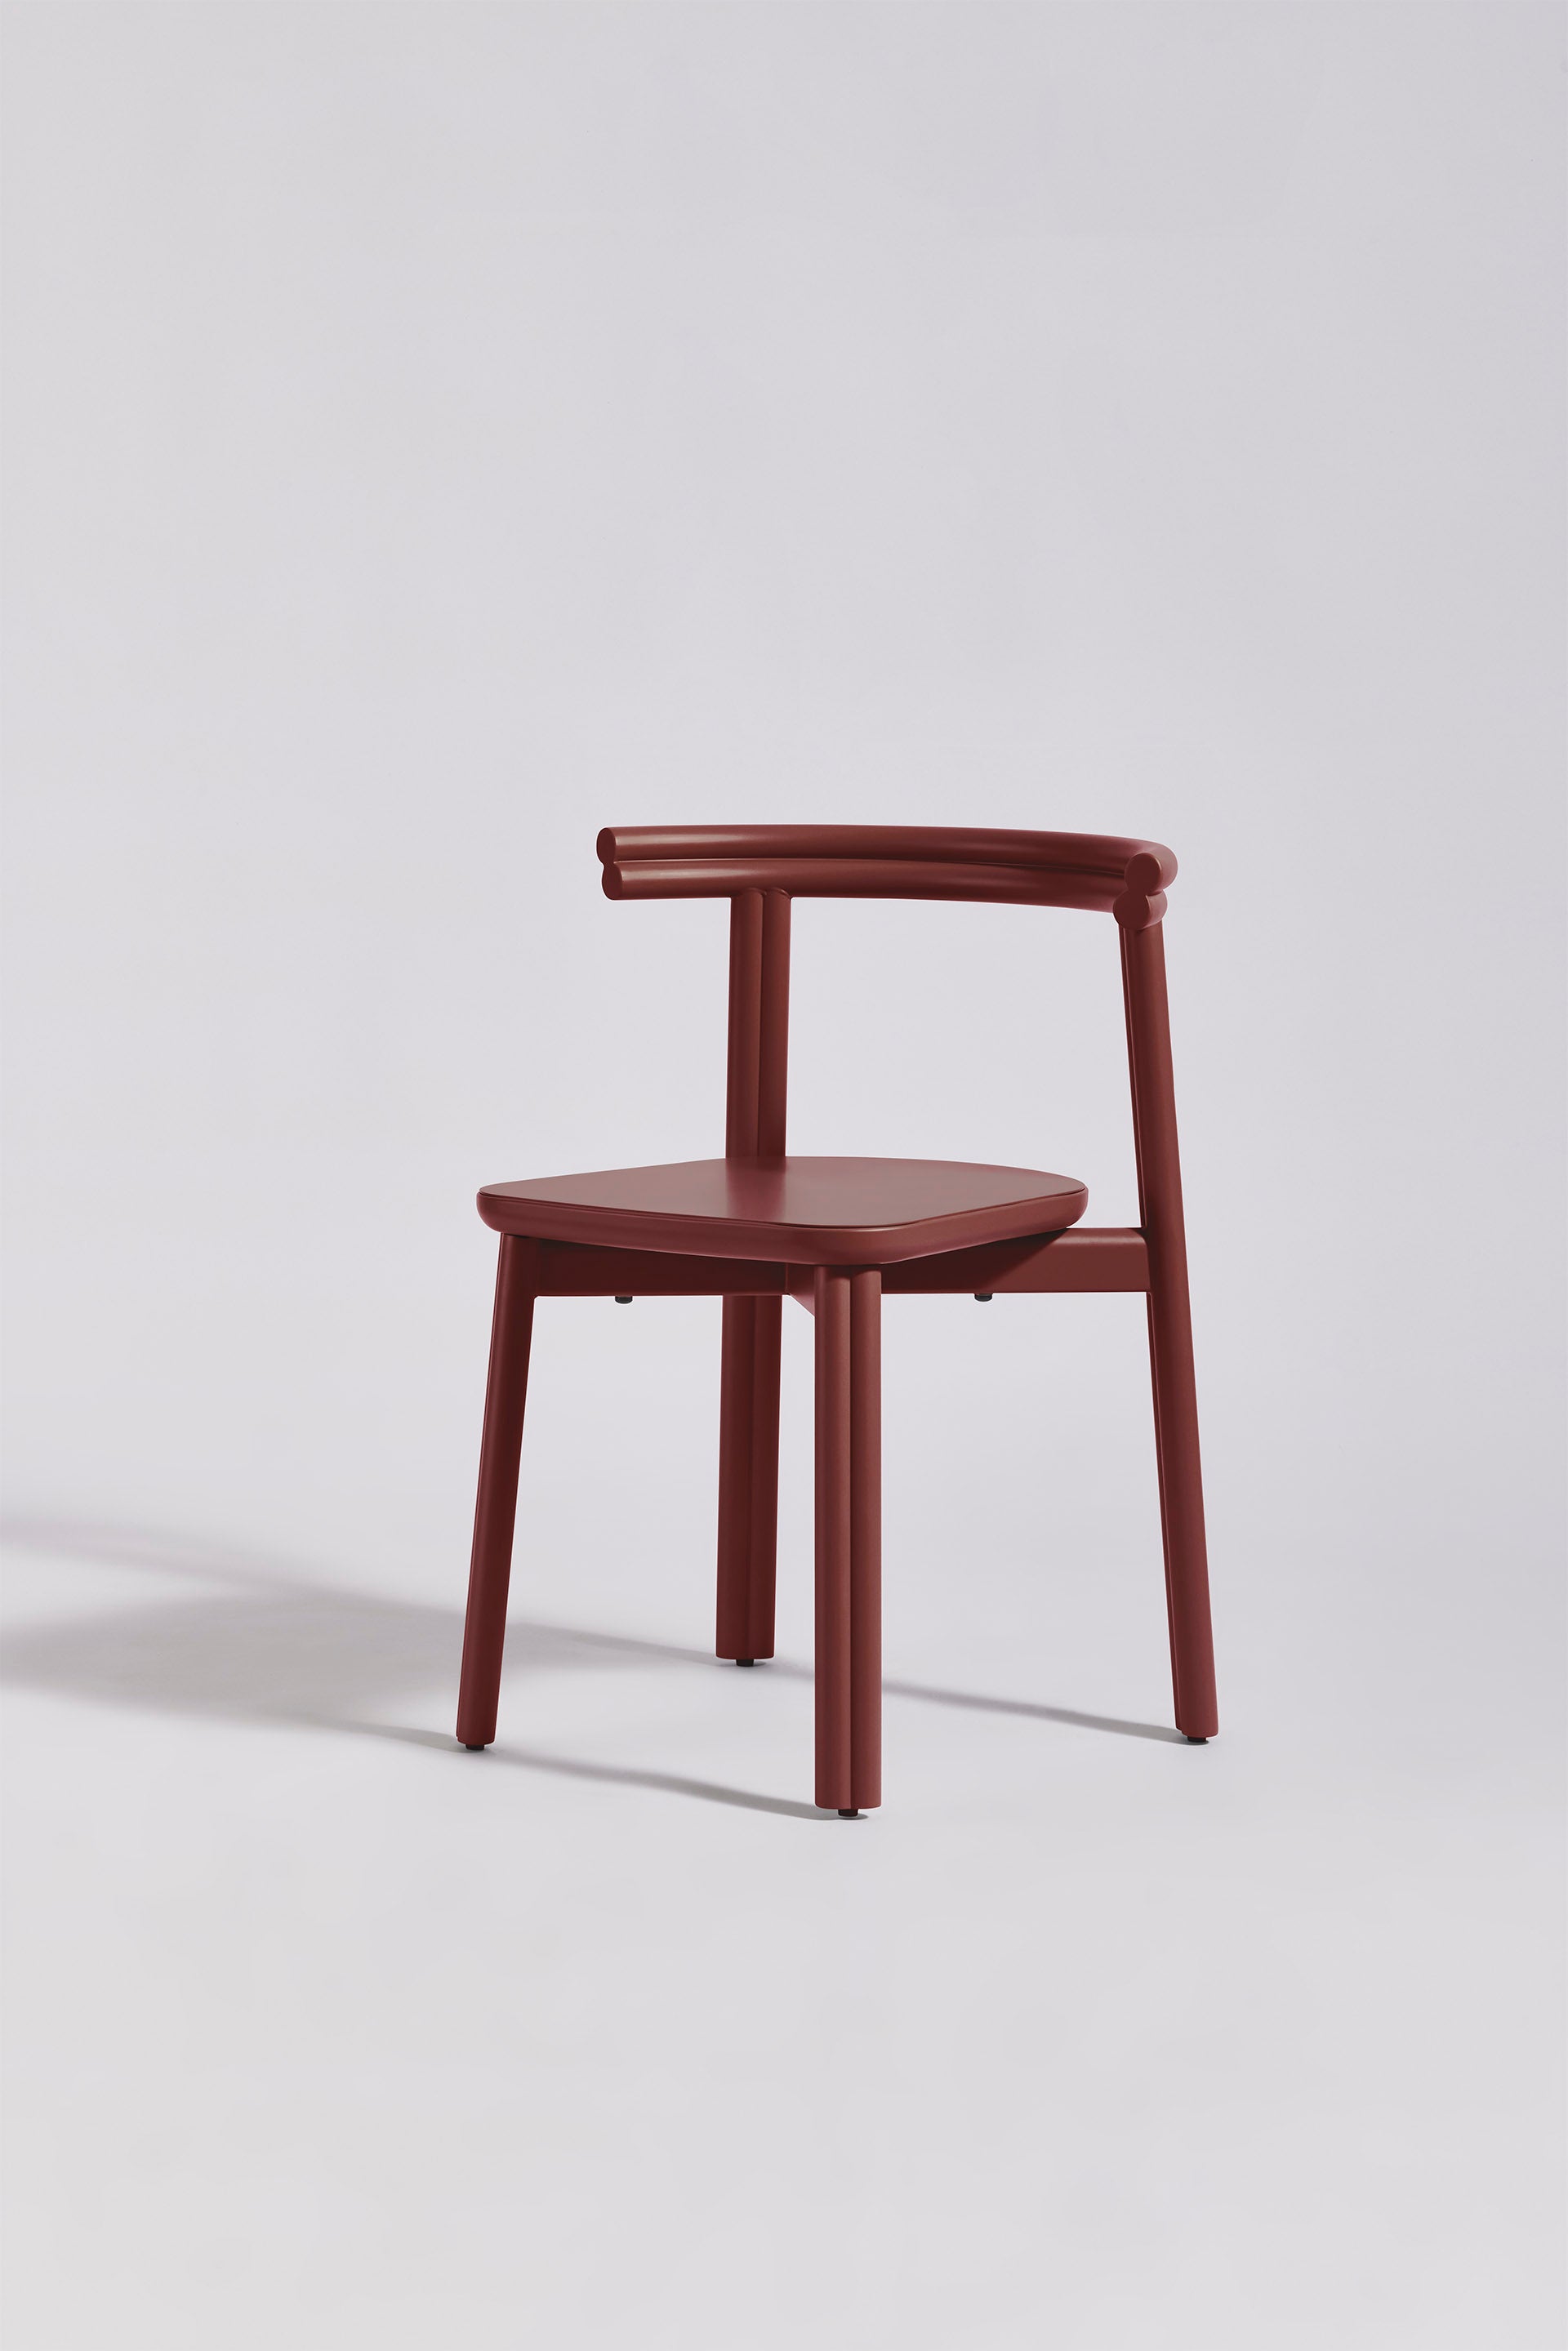 Twill Metal Chair | Rust Red Metal Dining Chair | GibsonKarlo | DesignByThem